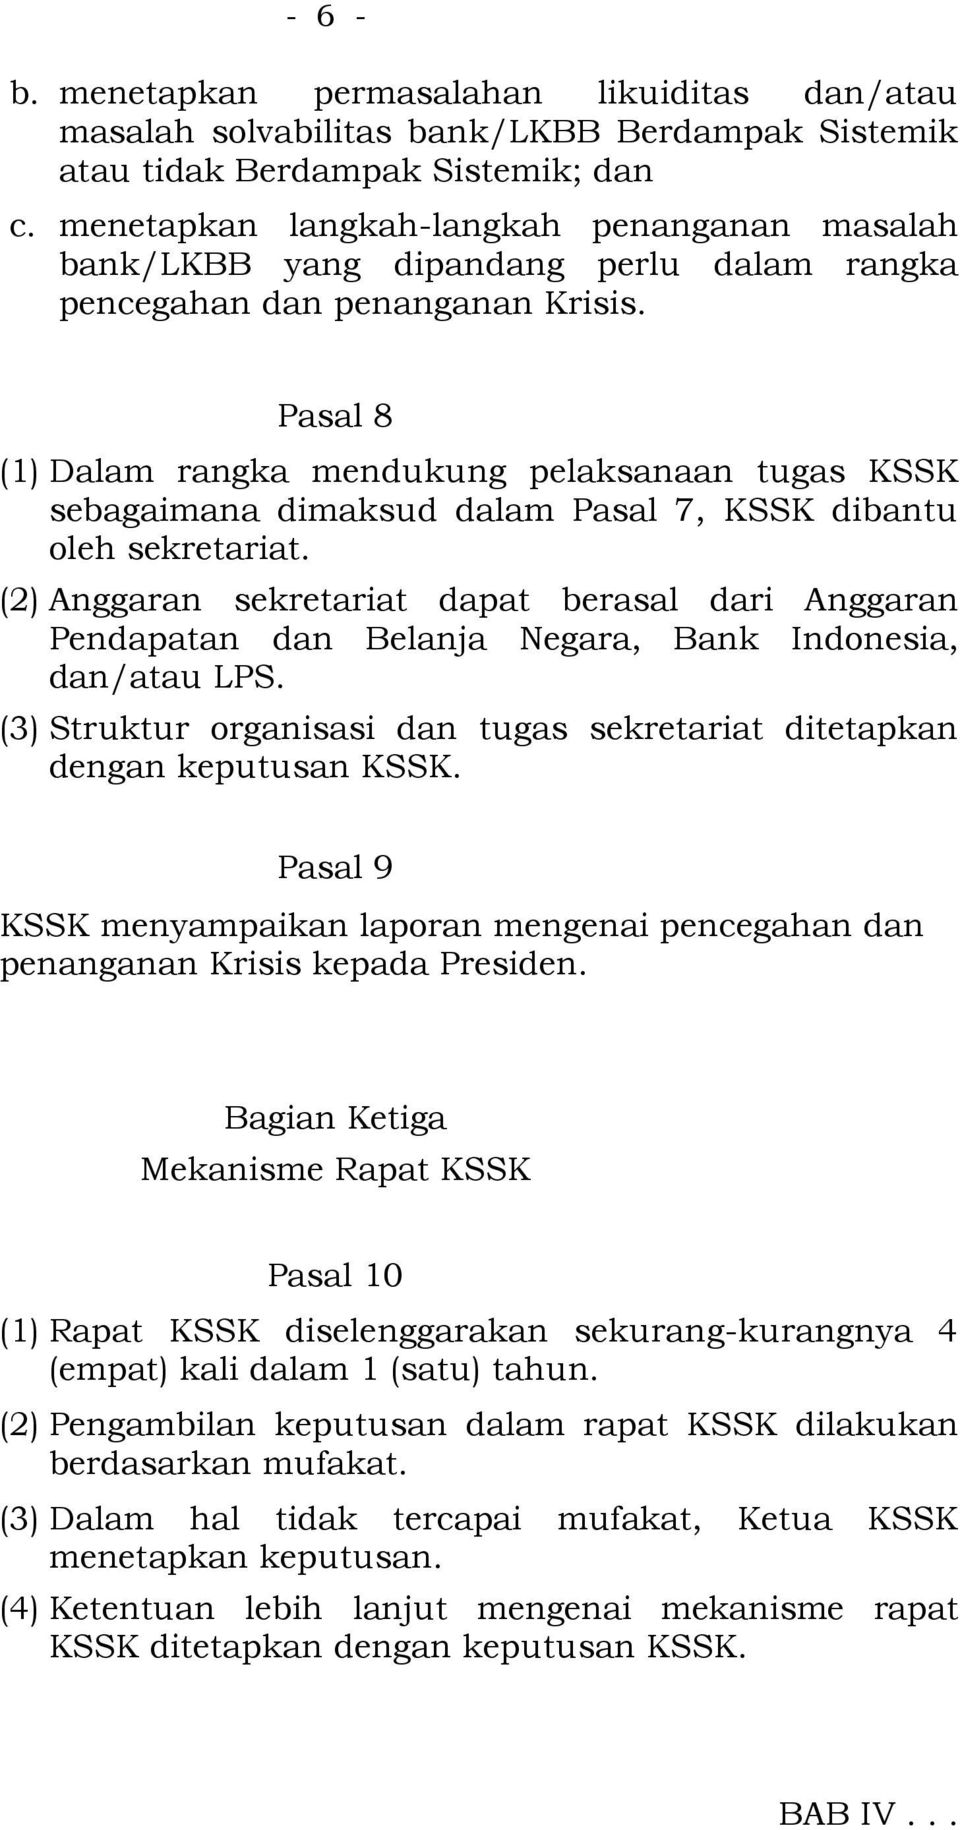 Pasal 8 (1) Dalam rangka mendukung pelaksanaan tugas KSSK sebagaimana dimaksud dalam Pasal 7, KSSK dibantu oleh sekretariat.